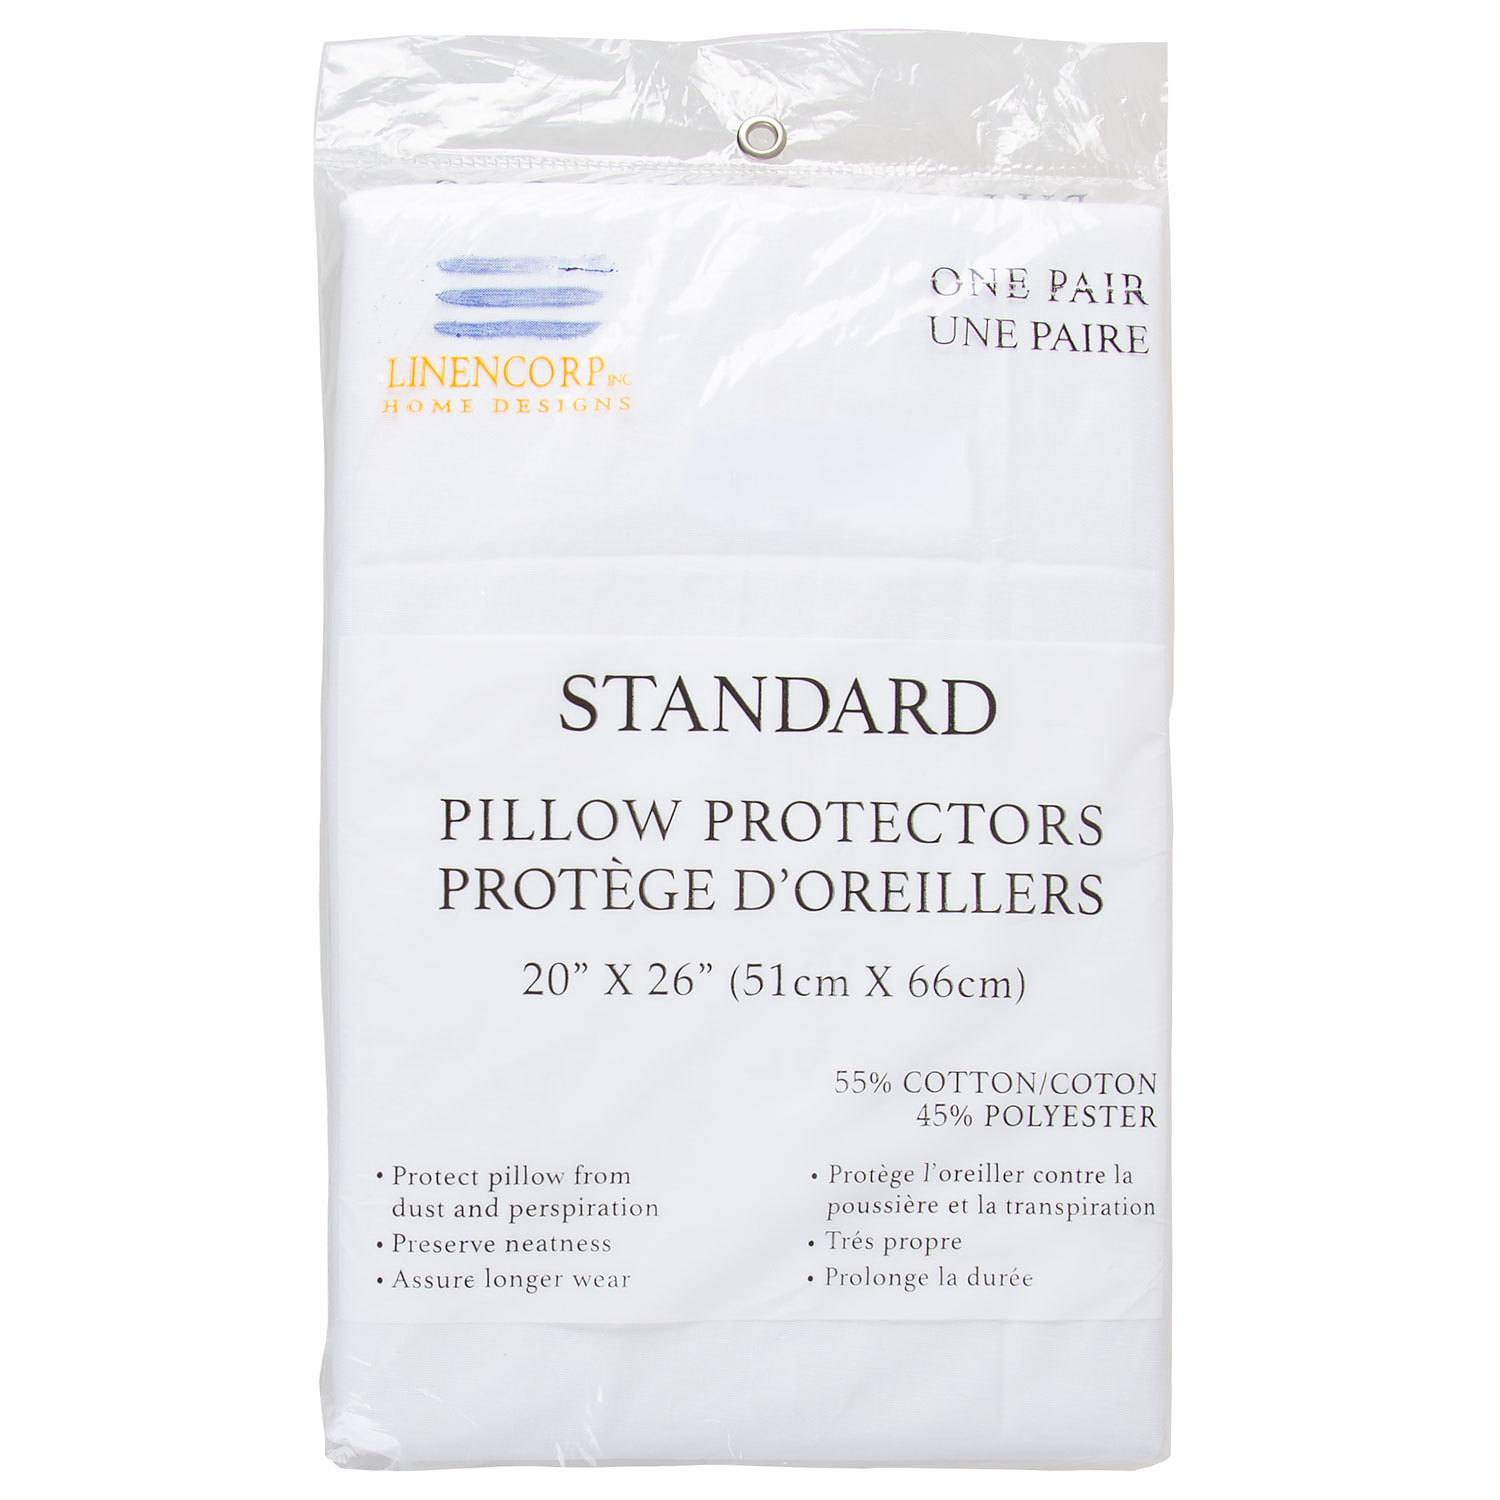 Protège-oreillers, standard, paq. de 2